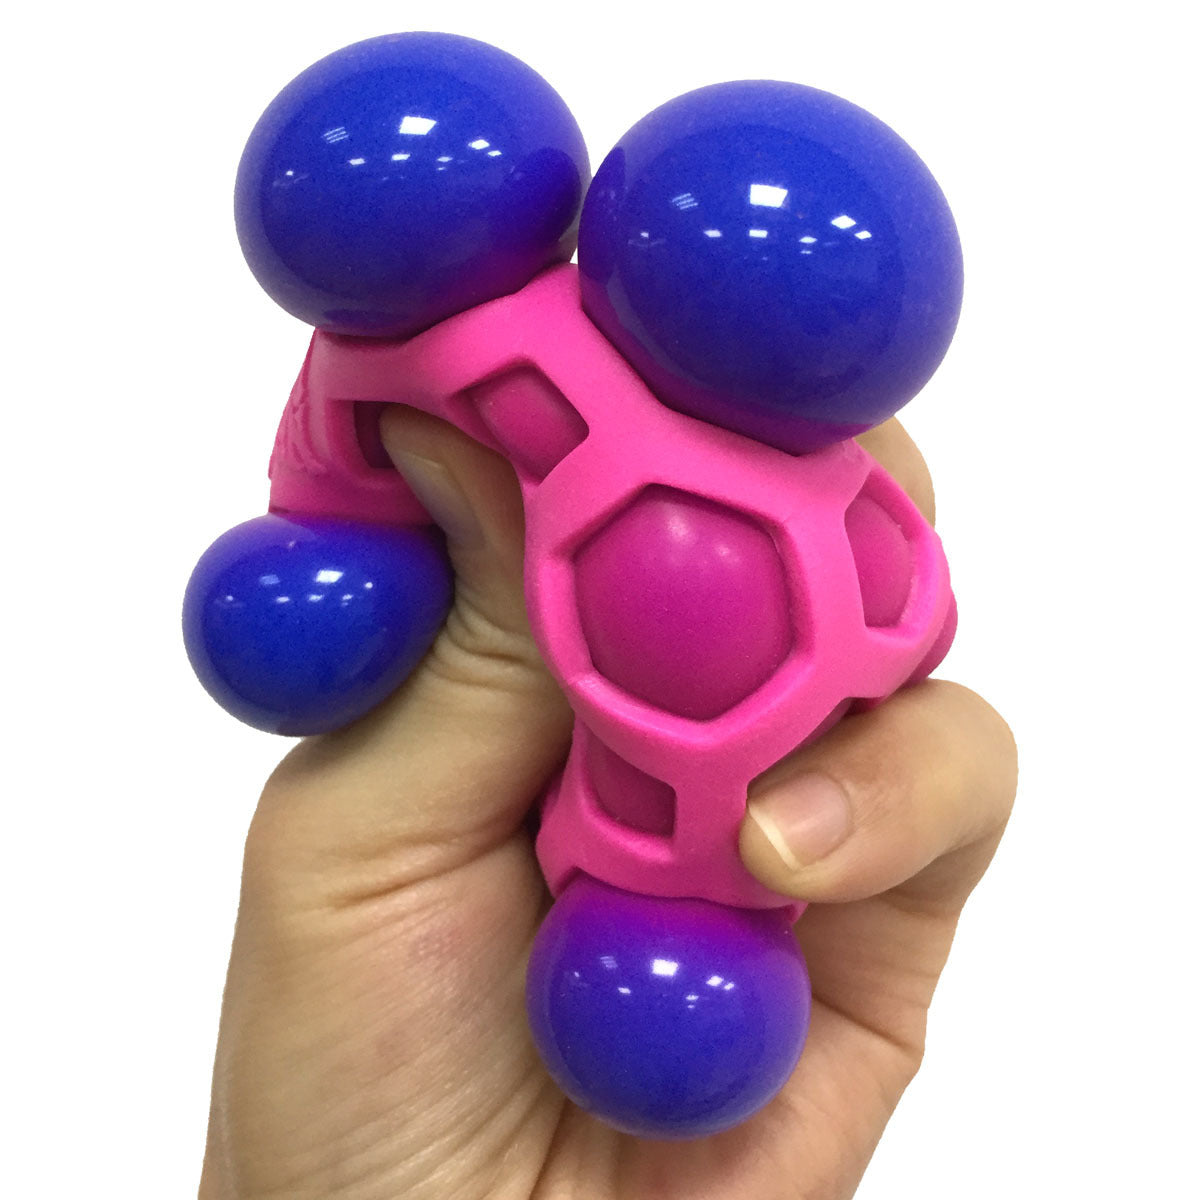 The Groovy Glob - Atomic Nee Doh Fidget Toy (Styles Vary)